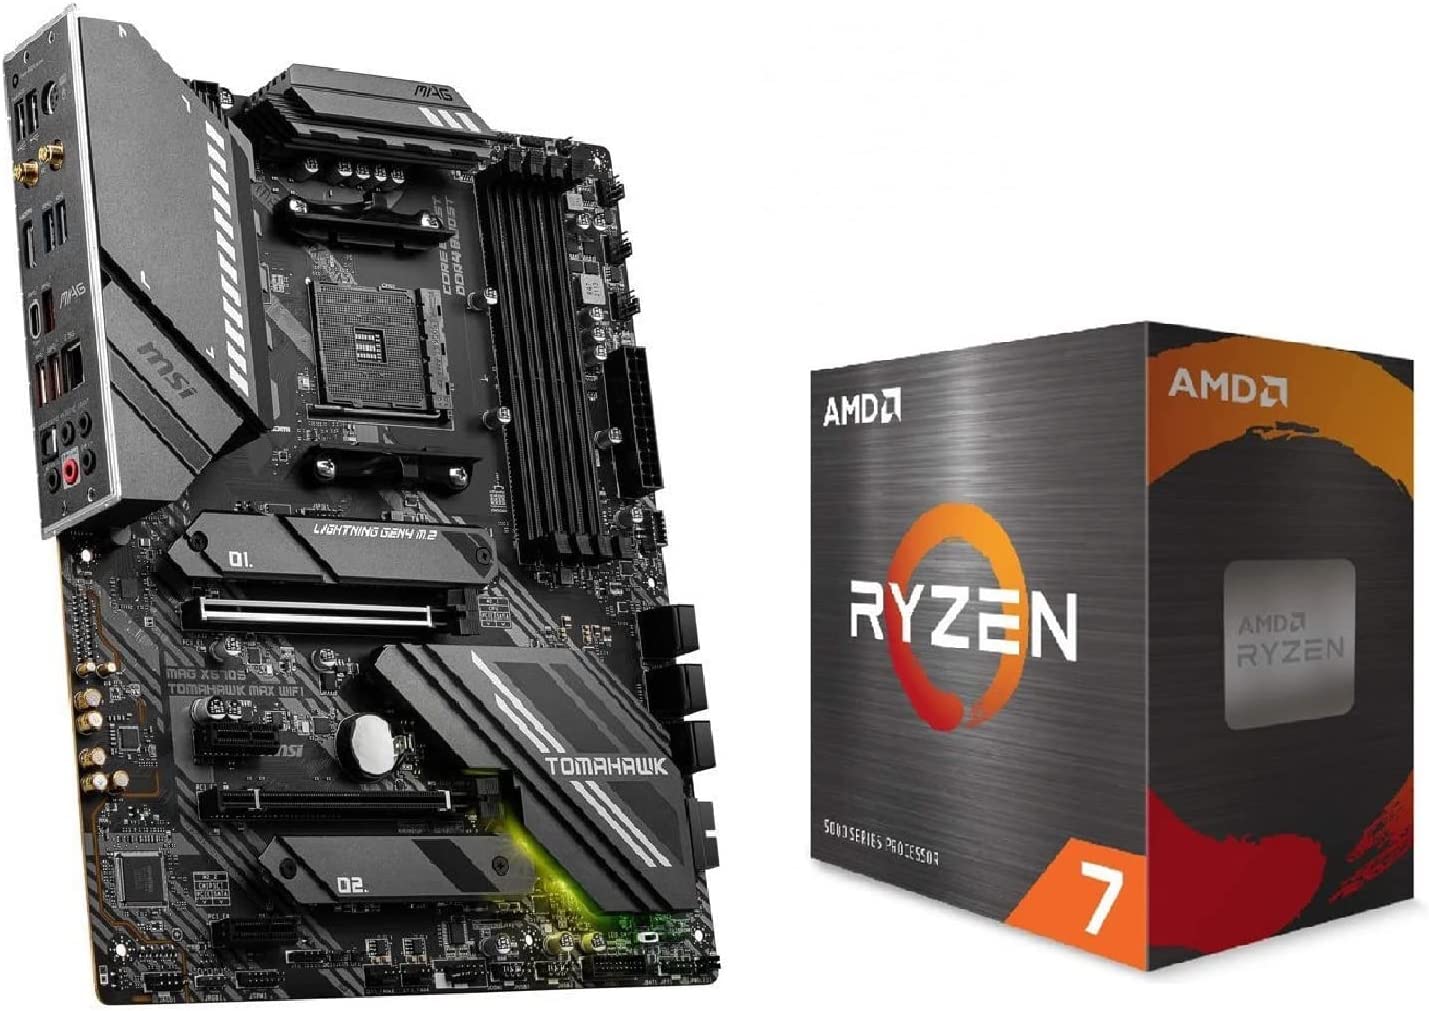 AMD Ryzen 7 5800X 8-Core 16-Thread AM4 Unlocked Desktop Processor with MSI MAG X570S Tomahawk MAX WiFi Motherboard $382.49